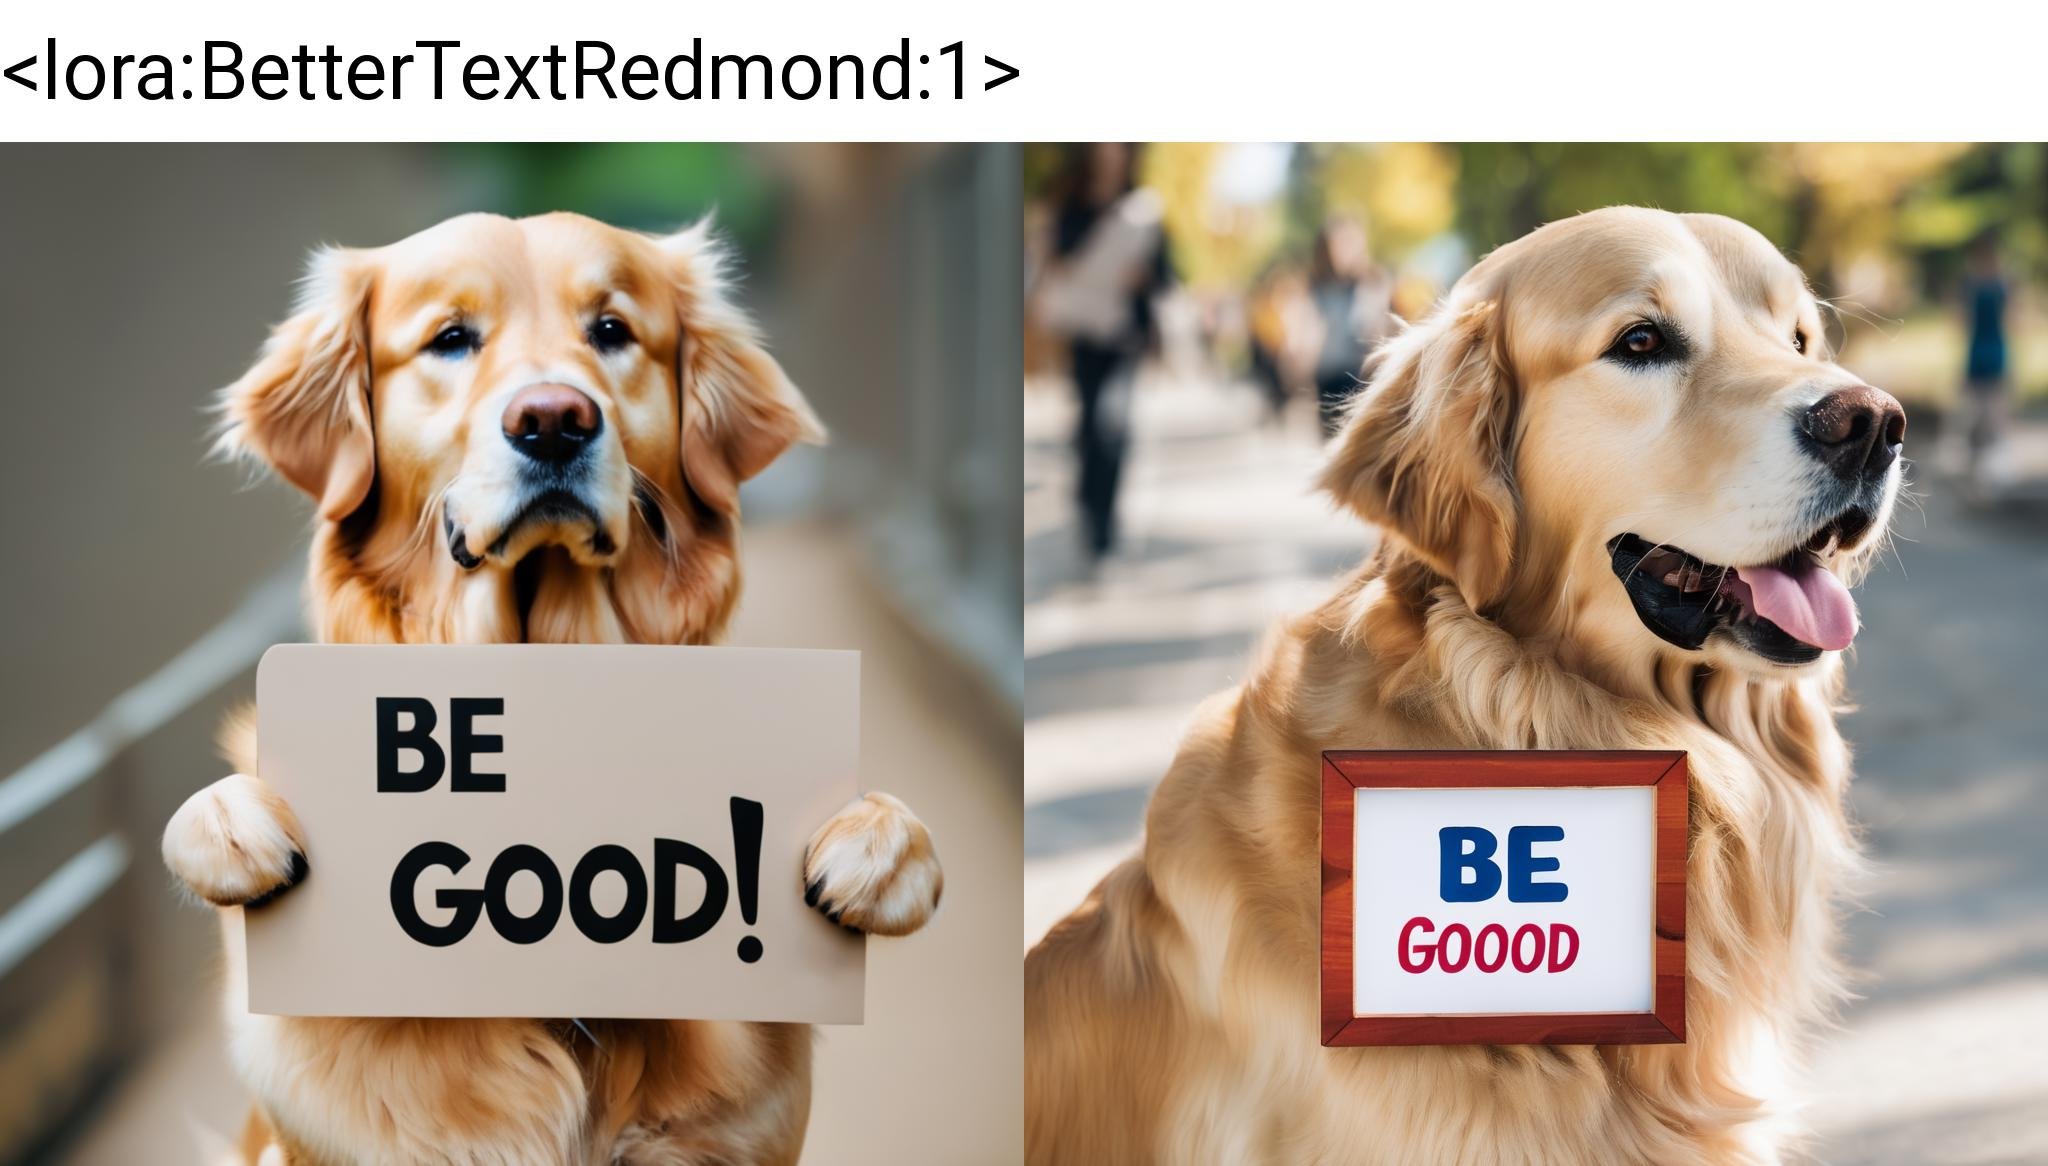 A golden retriever holding a sign with "BE GOOD" on it, <lora:BetterTextRedmond:1>